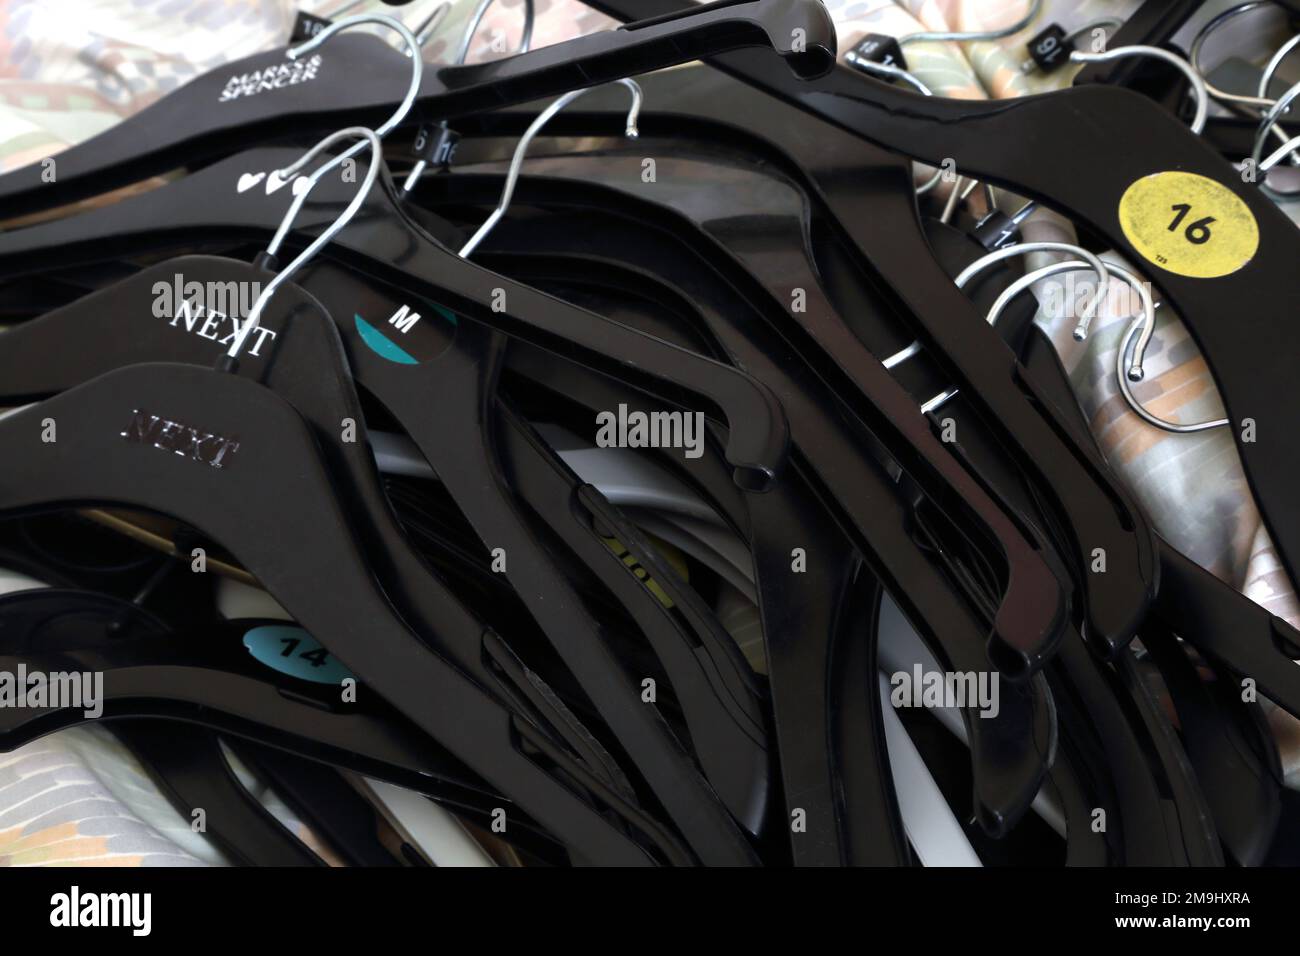 A Bundle of Plastic Clothes Hangers Stock Photo